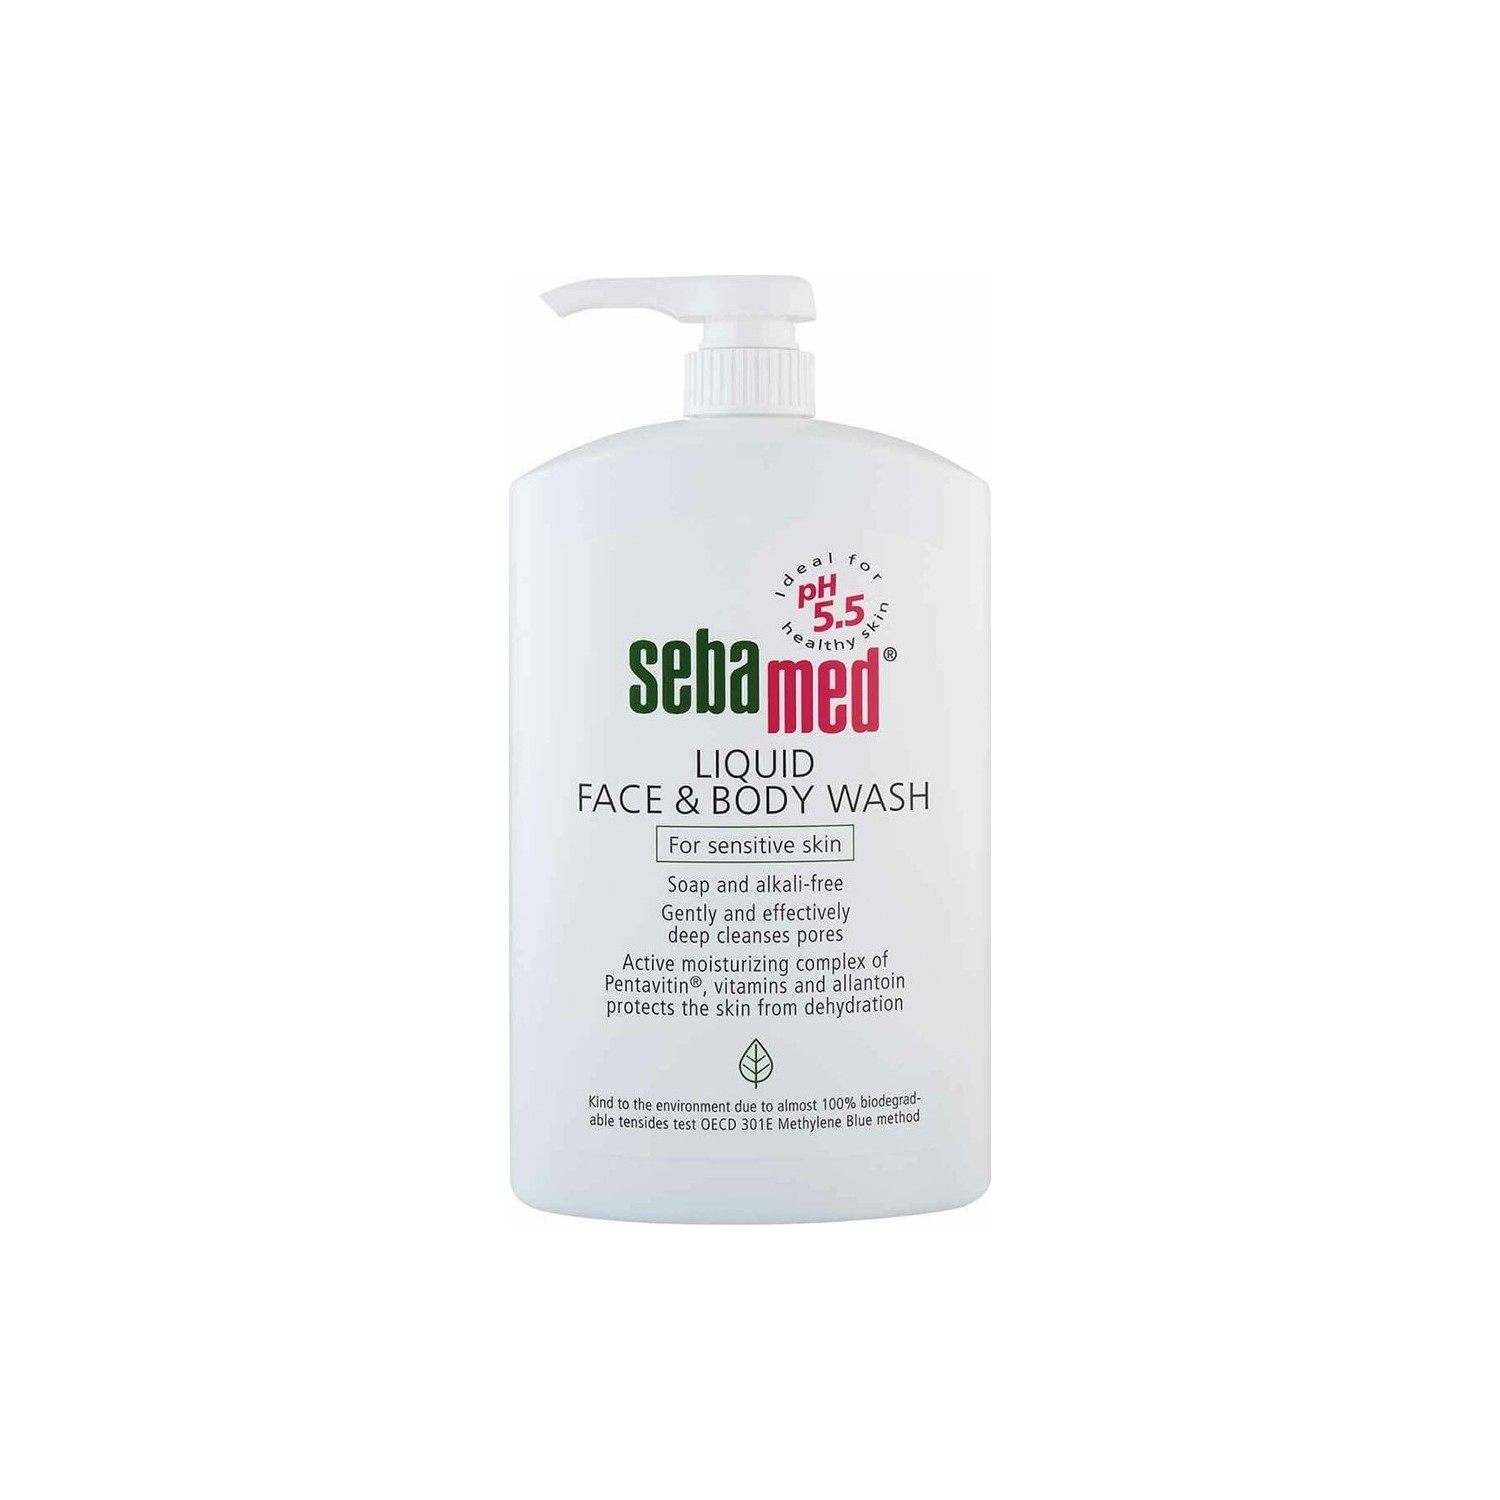 Очищающее средство Sebamed Liquid для лица и тела, 1000 мл insight man hair and body cleanser